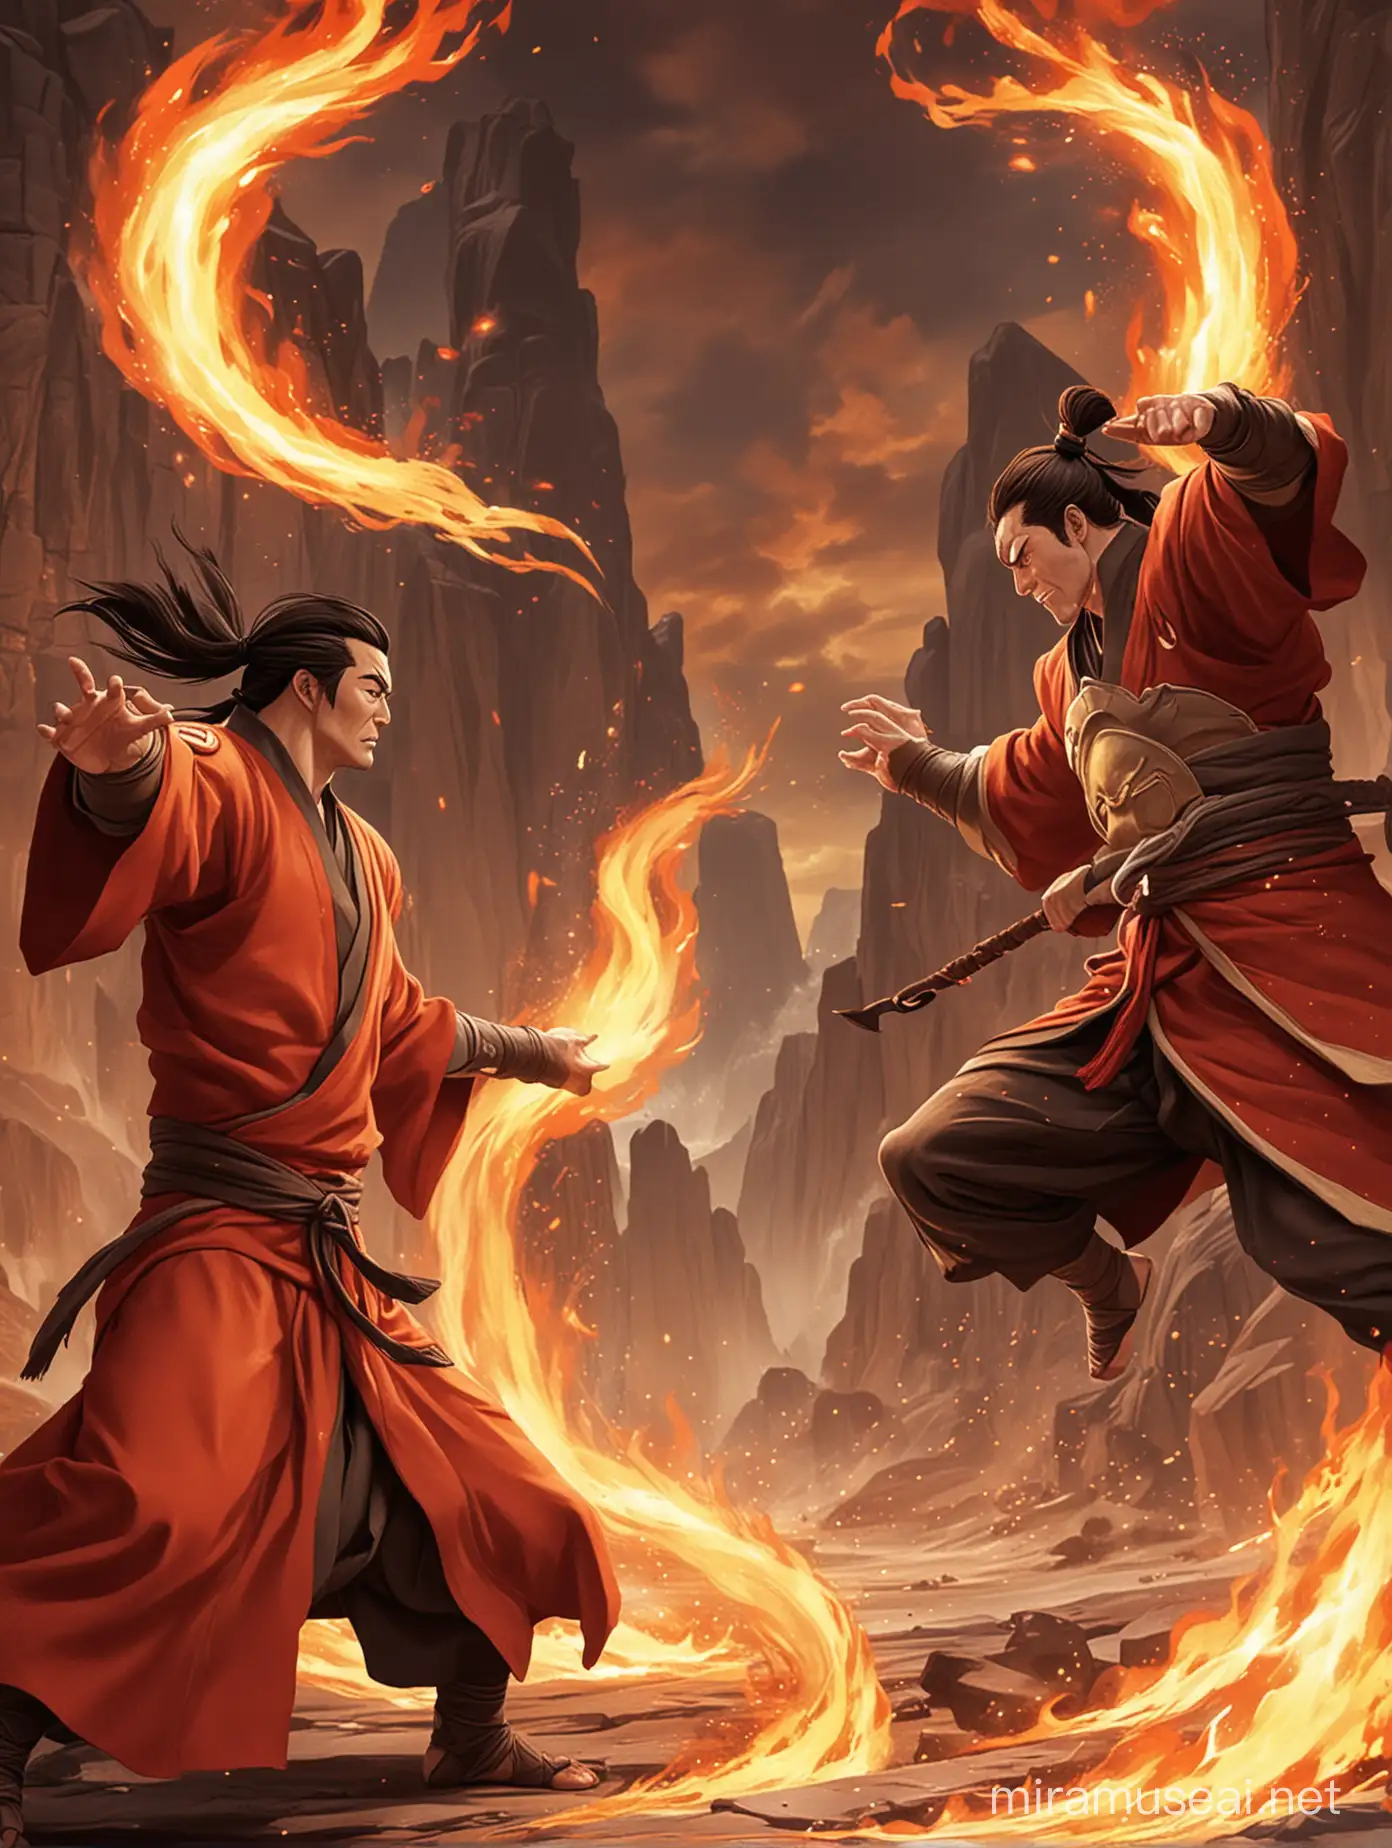 Epic Battle Fire Lord Ozai vs Muscular Iroh